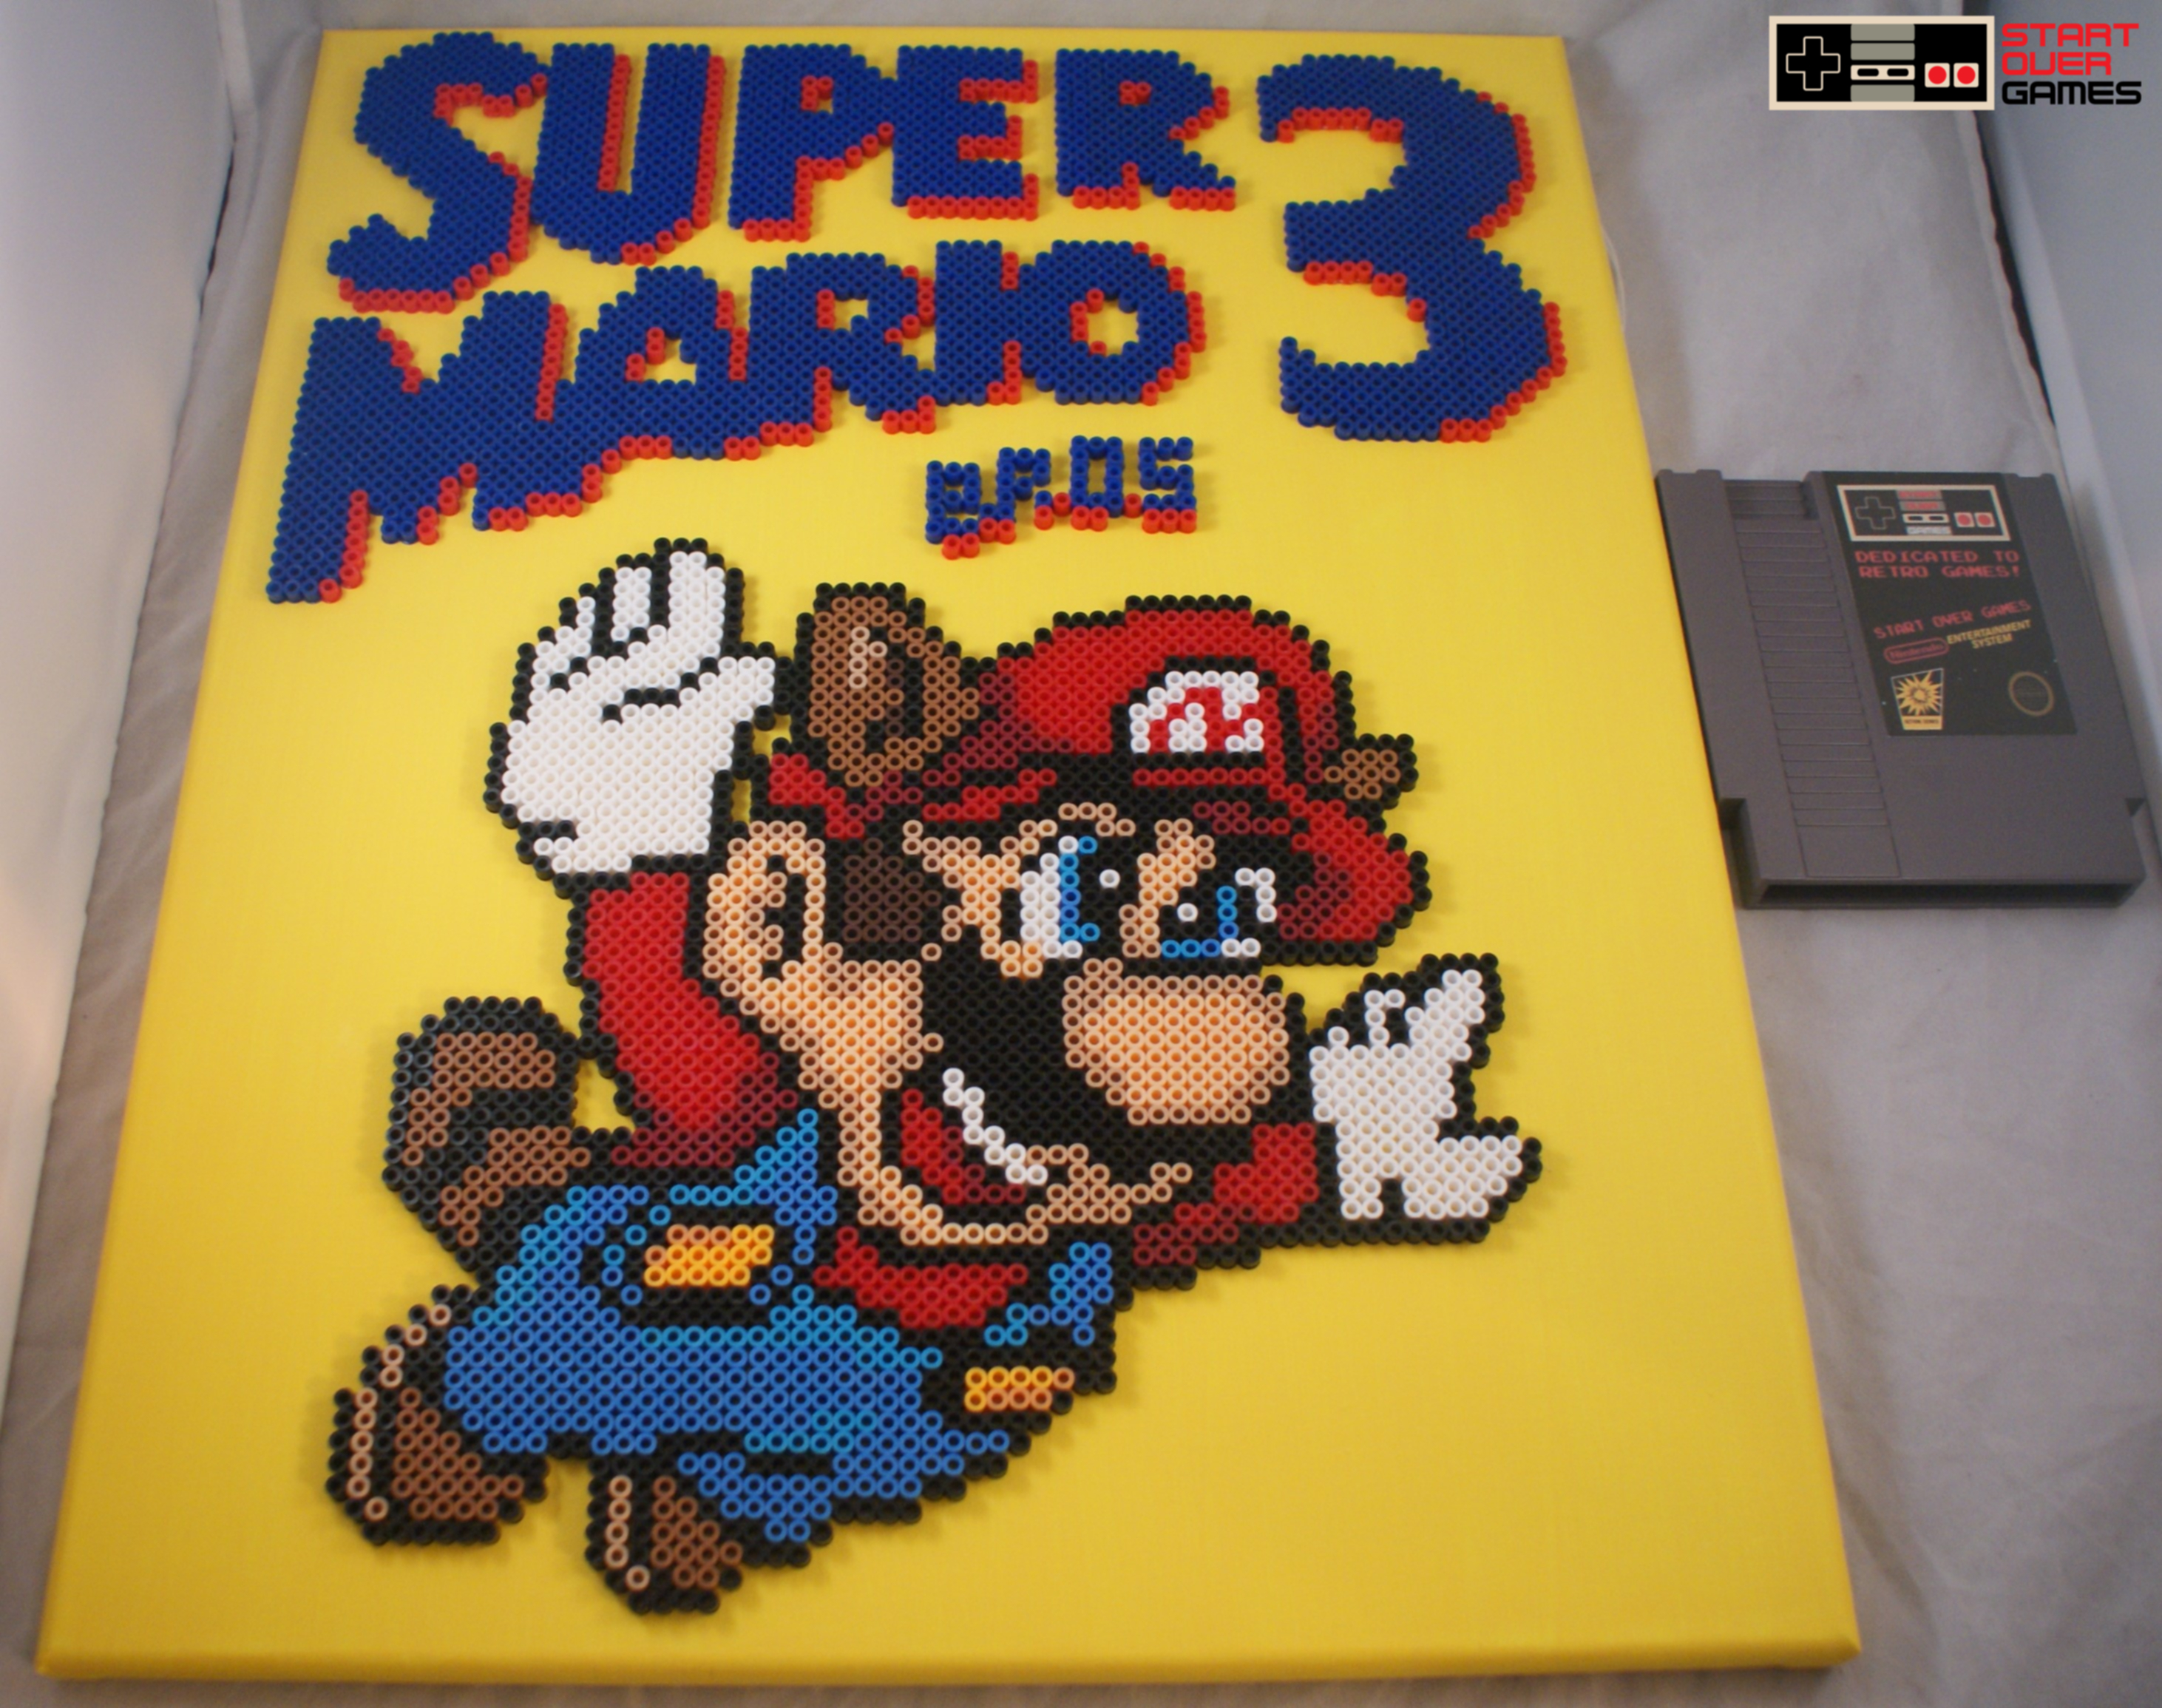 Super Mario Bros 3 Pixel Art Gallery Of Arts And Crafts